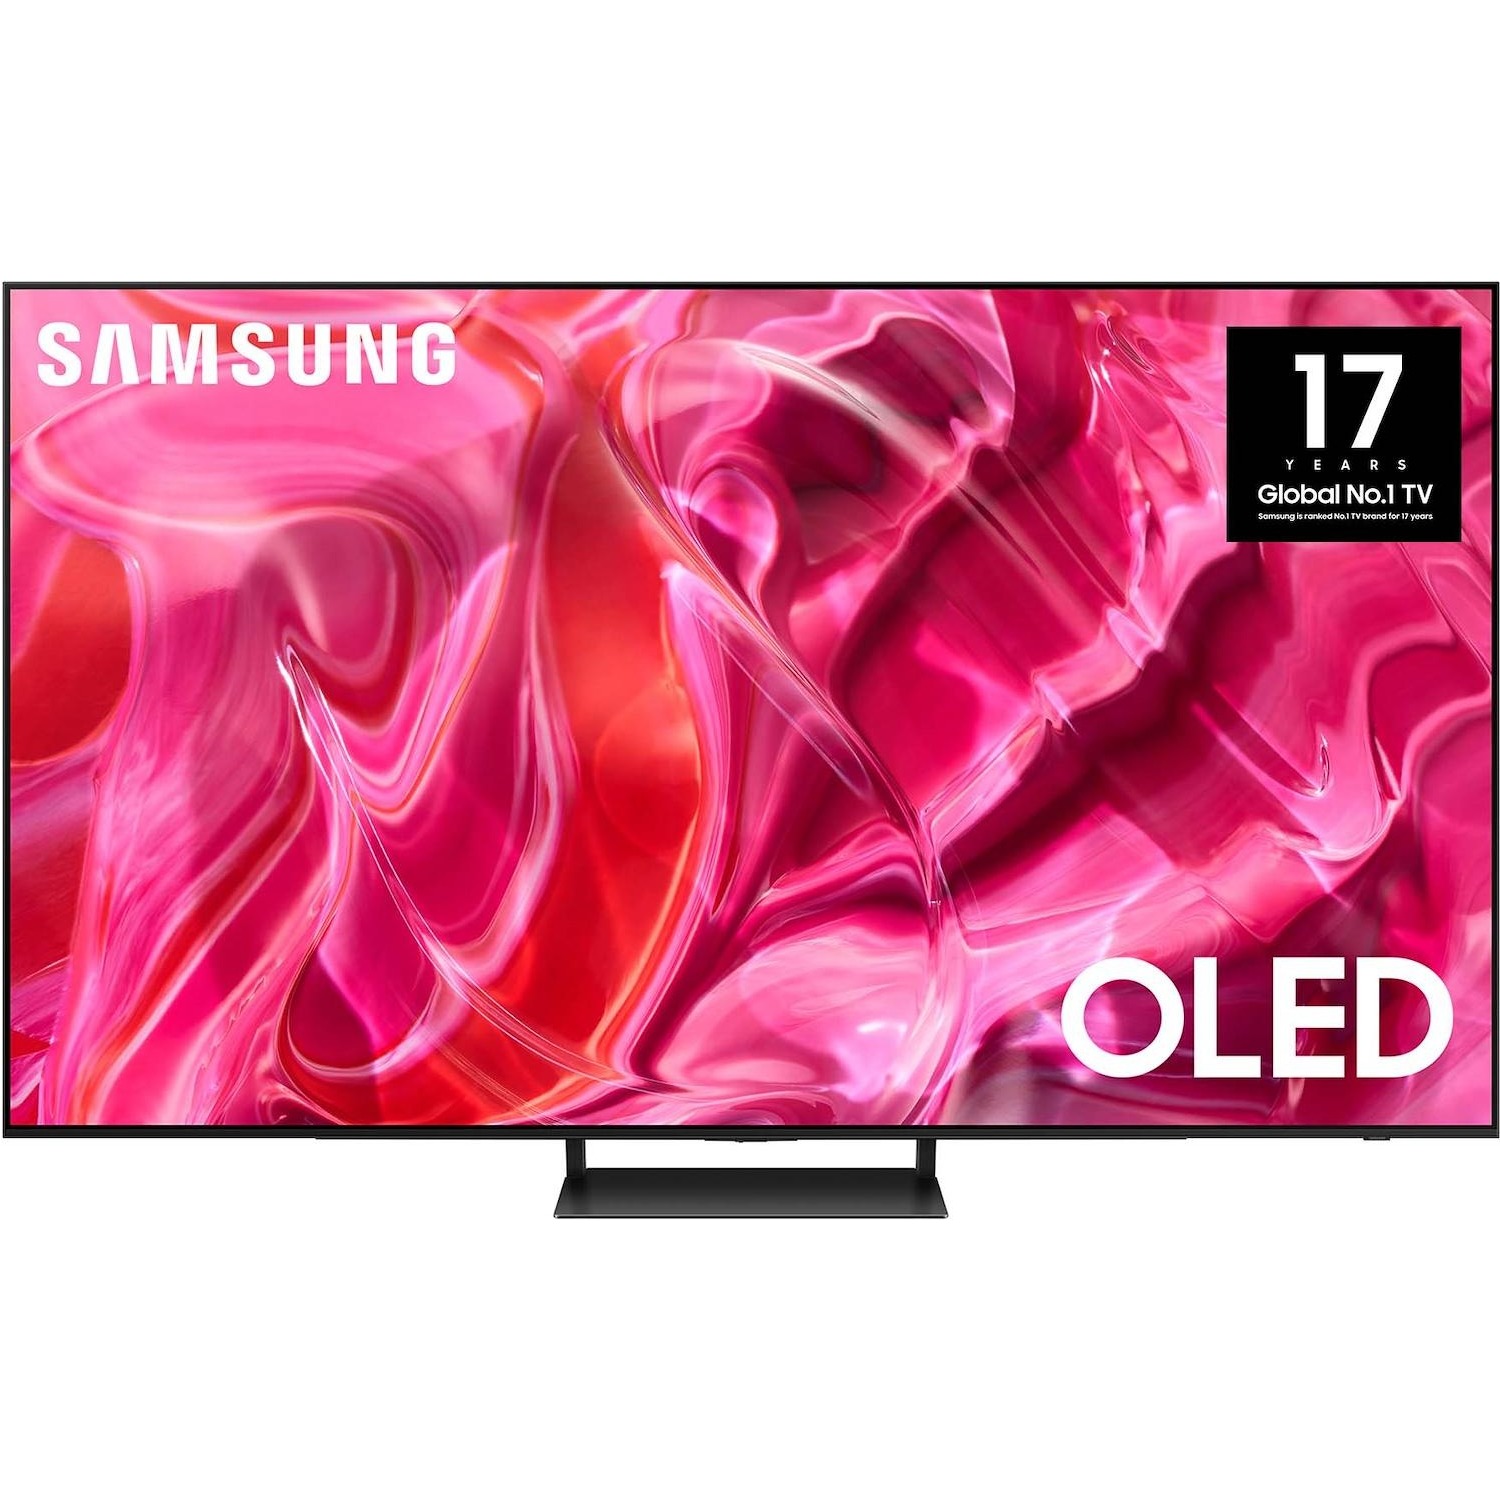 Immagine per TV OLED UHD 4K Smart Samsung 77S90C da DIMOStore